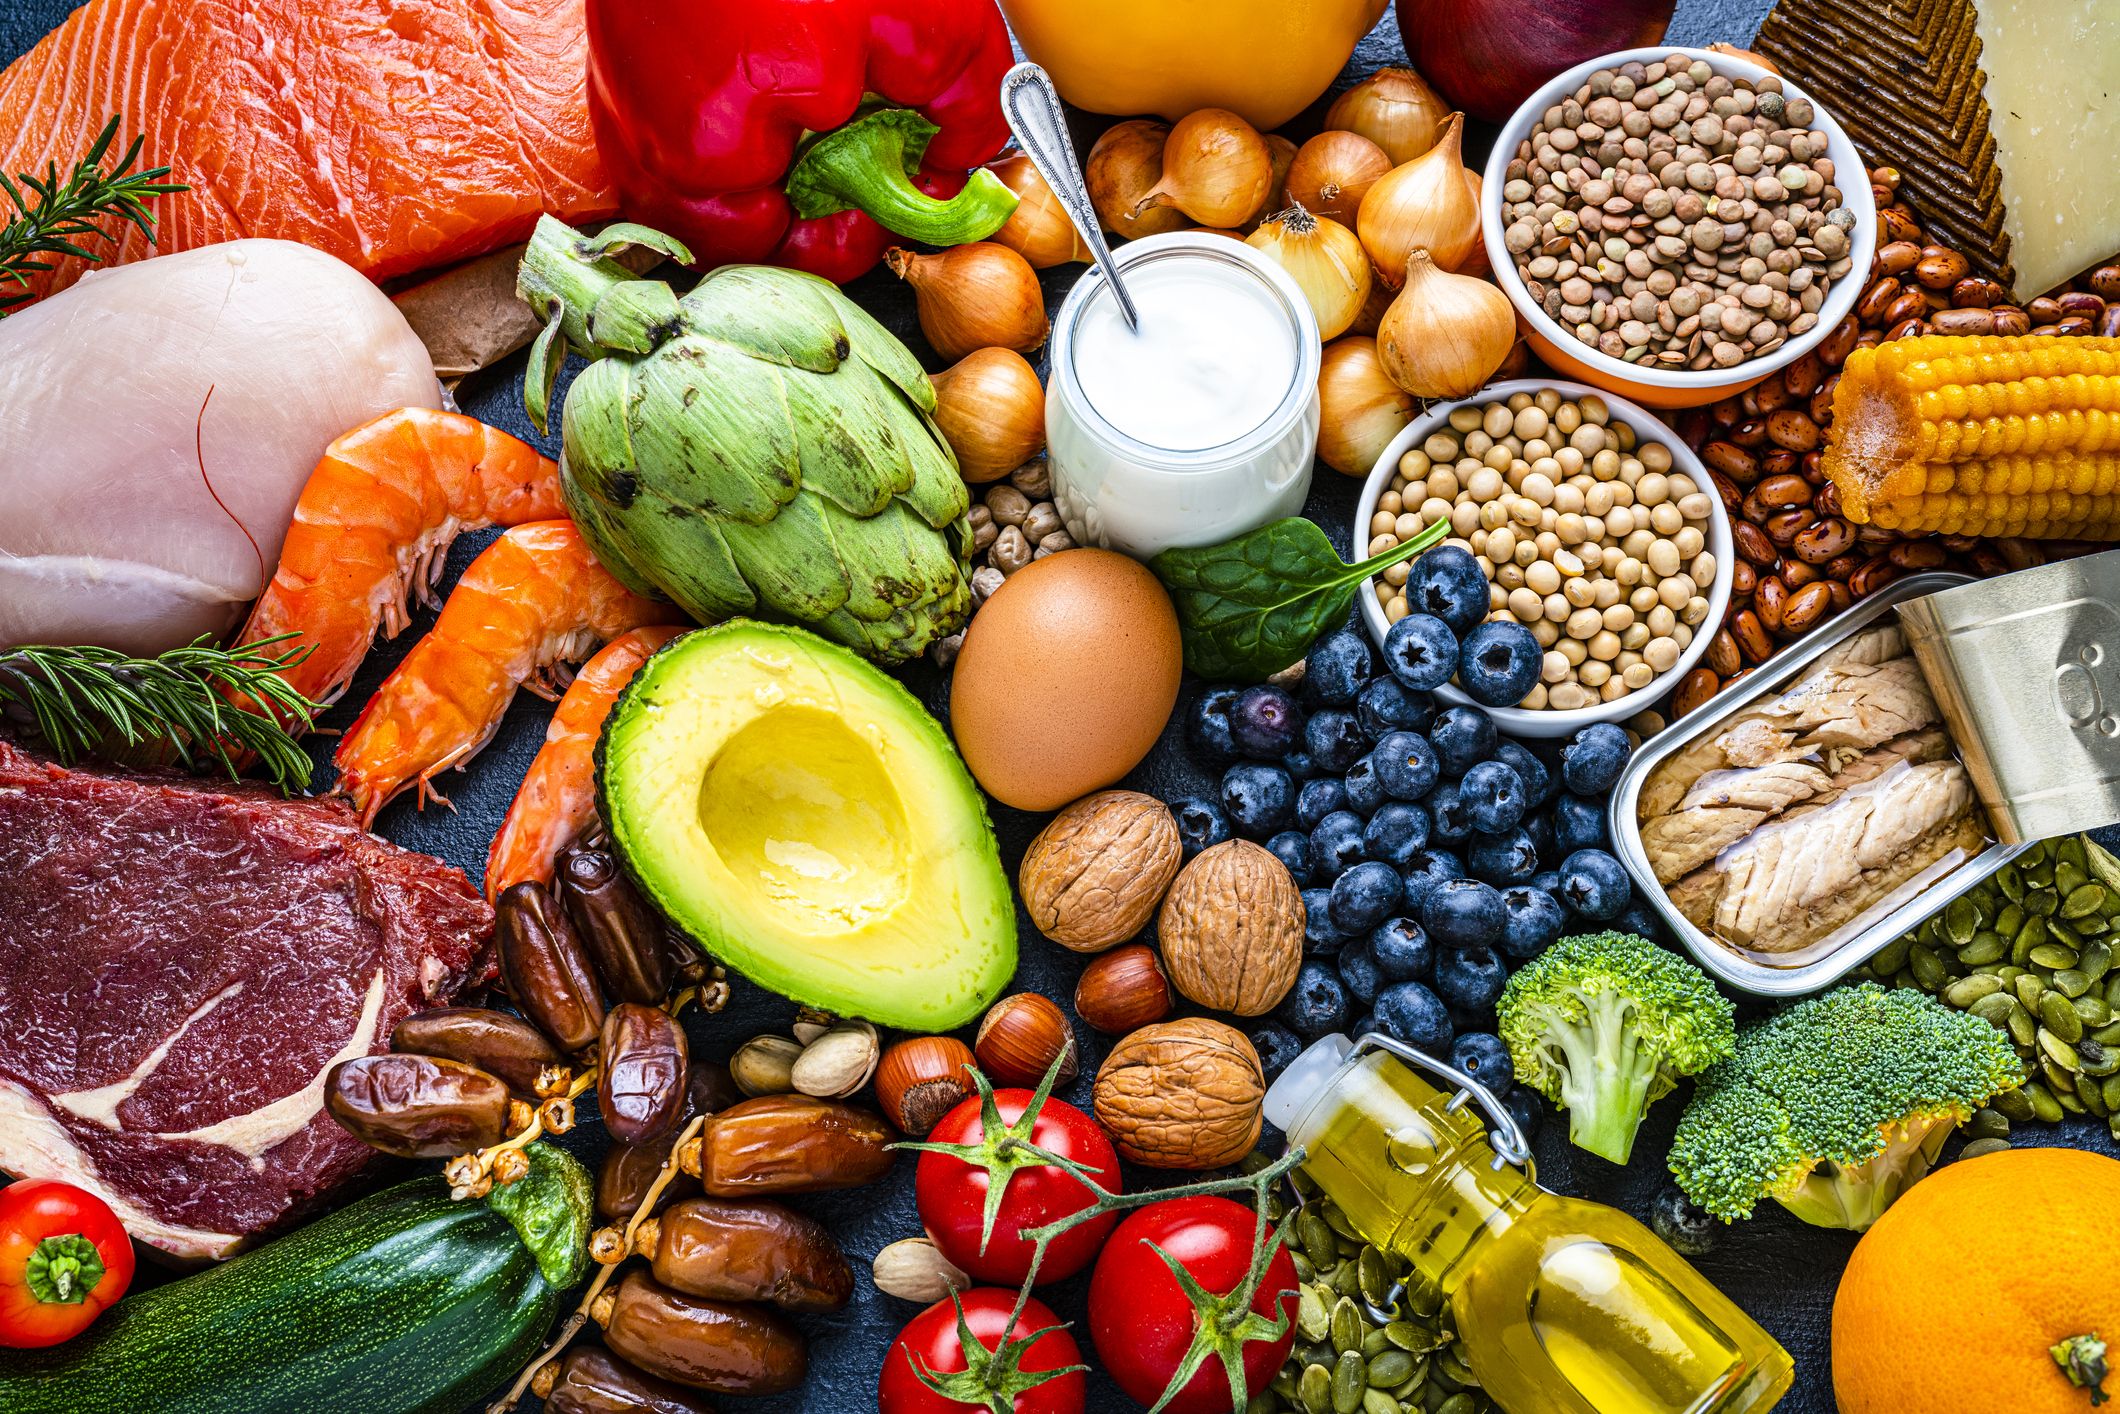 Frutta e verdure fresche contro le rughe e per mantenersi in salute -  Newsfood - Nutrimento e Nutrimente - News dal mondo Food